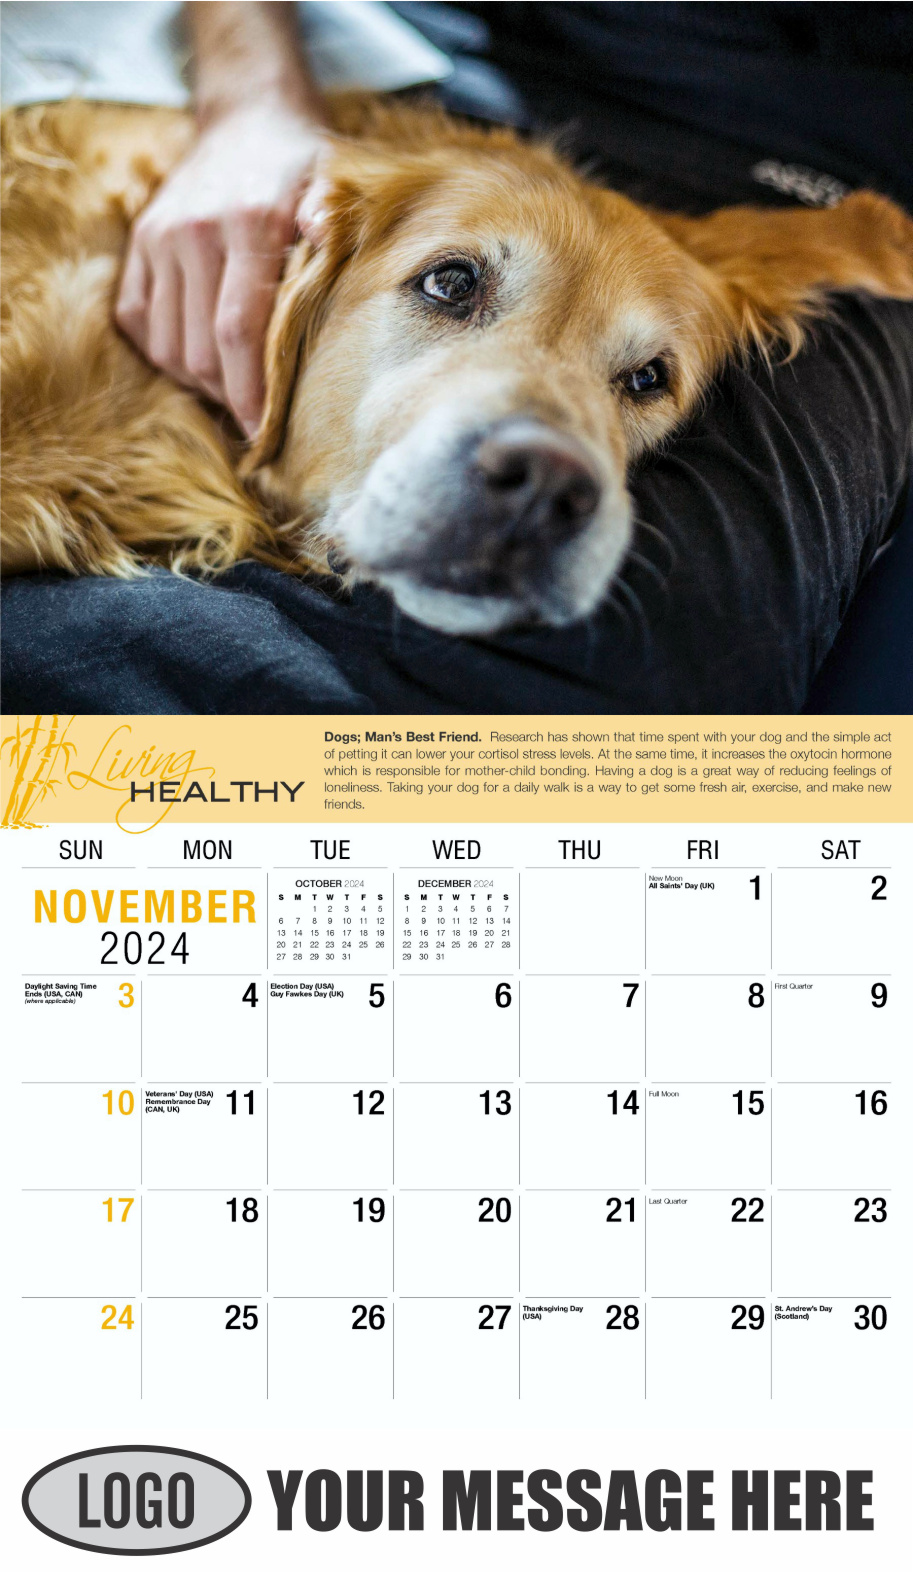 Living Healthy 2024 Business Promotional Calendar - November